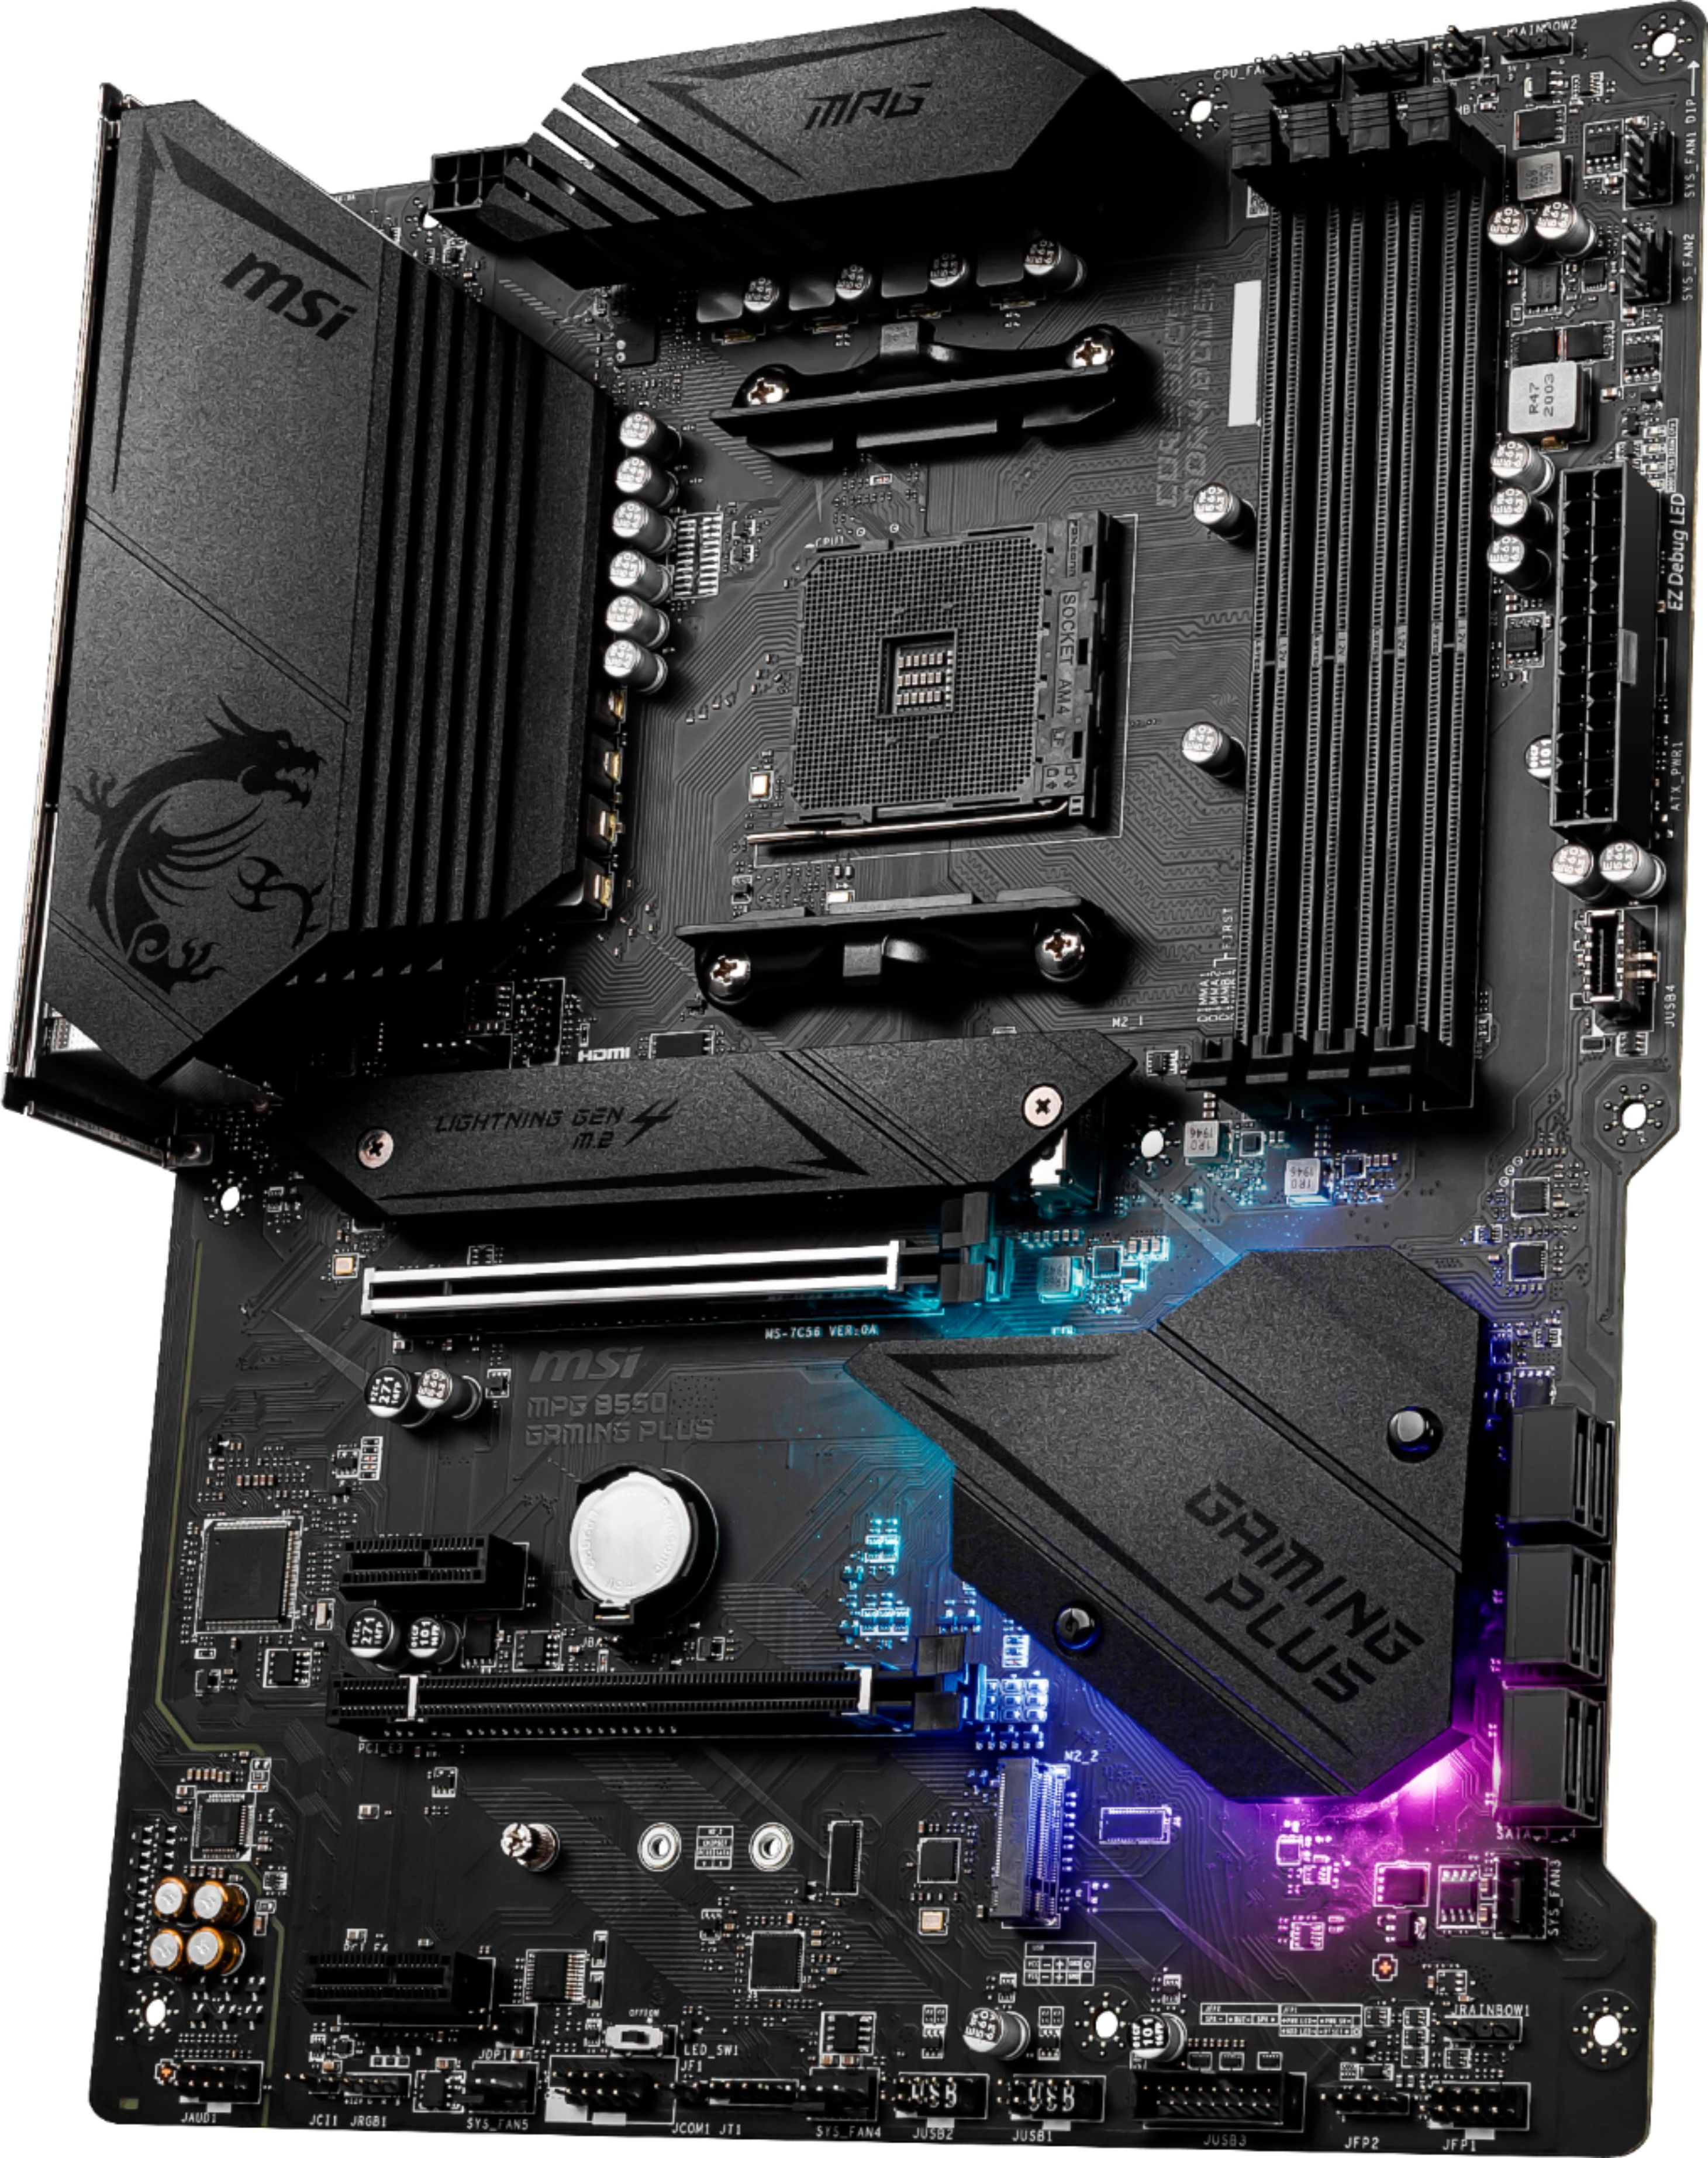 MSI B550 Gaming GEN3 Gaming Motherboard (AMD AM4, DDR4, PCIe 3.0, SATA  6Gb/s, M.2, USB 3.2 Gen 1, HDMI, ATX, AMD Ryzen 5000/4000 Series Processors)